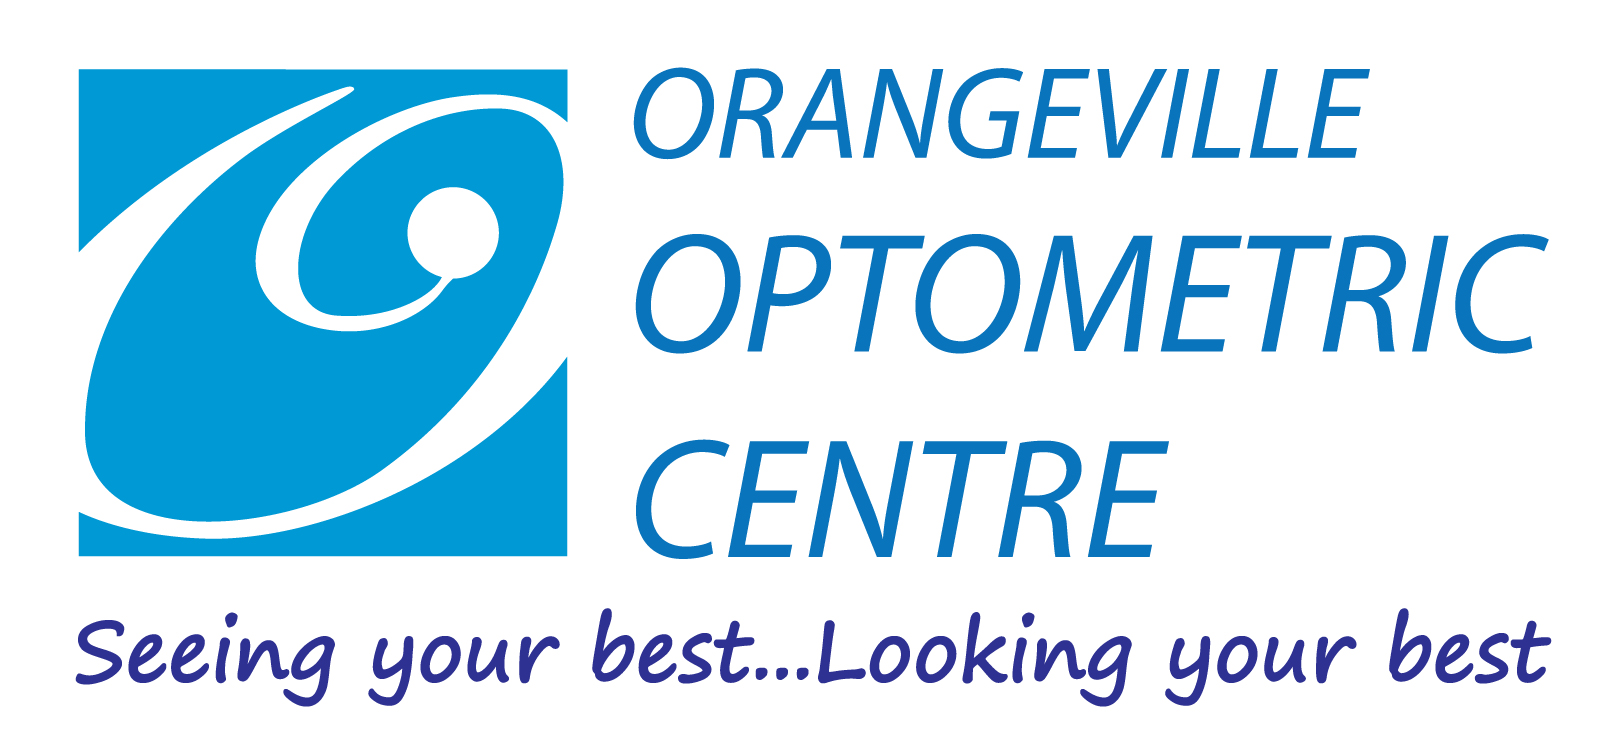 Orangeville Optometric Centre